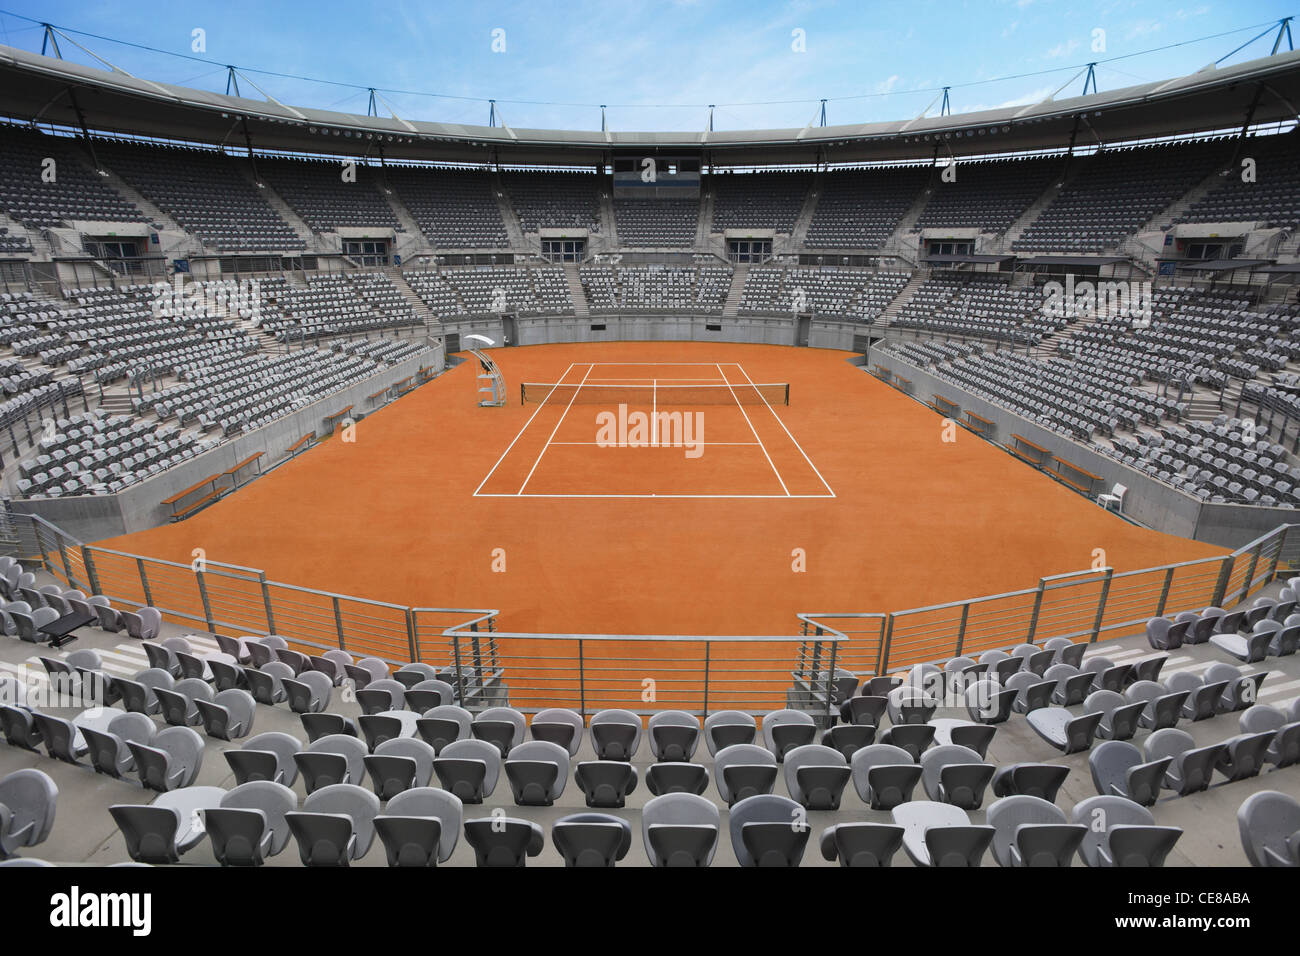 Vista generale del campo da Tennis in terra battuta Foto Stock